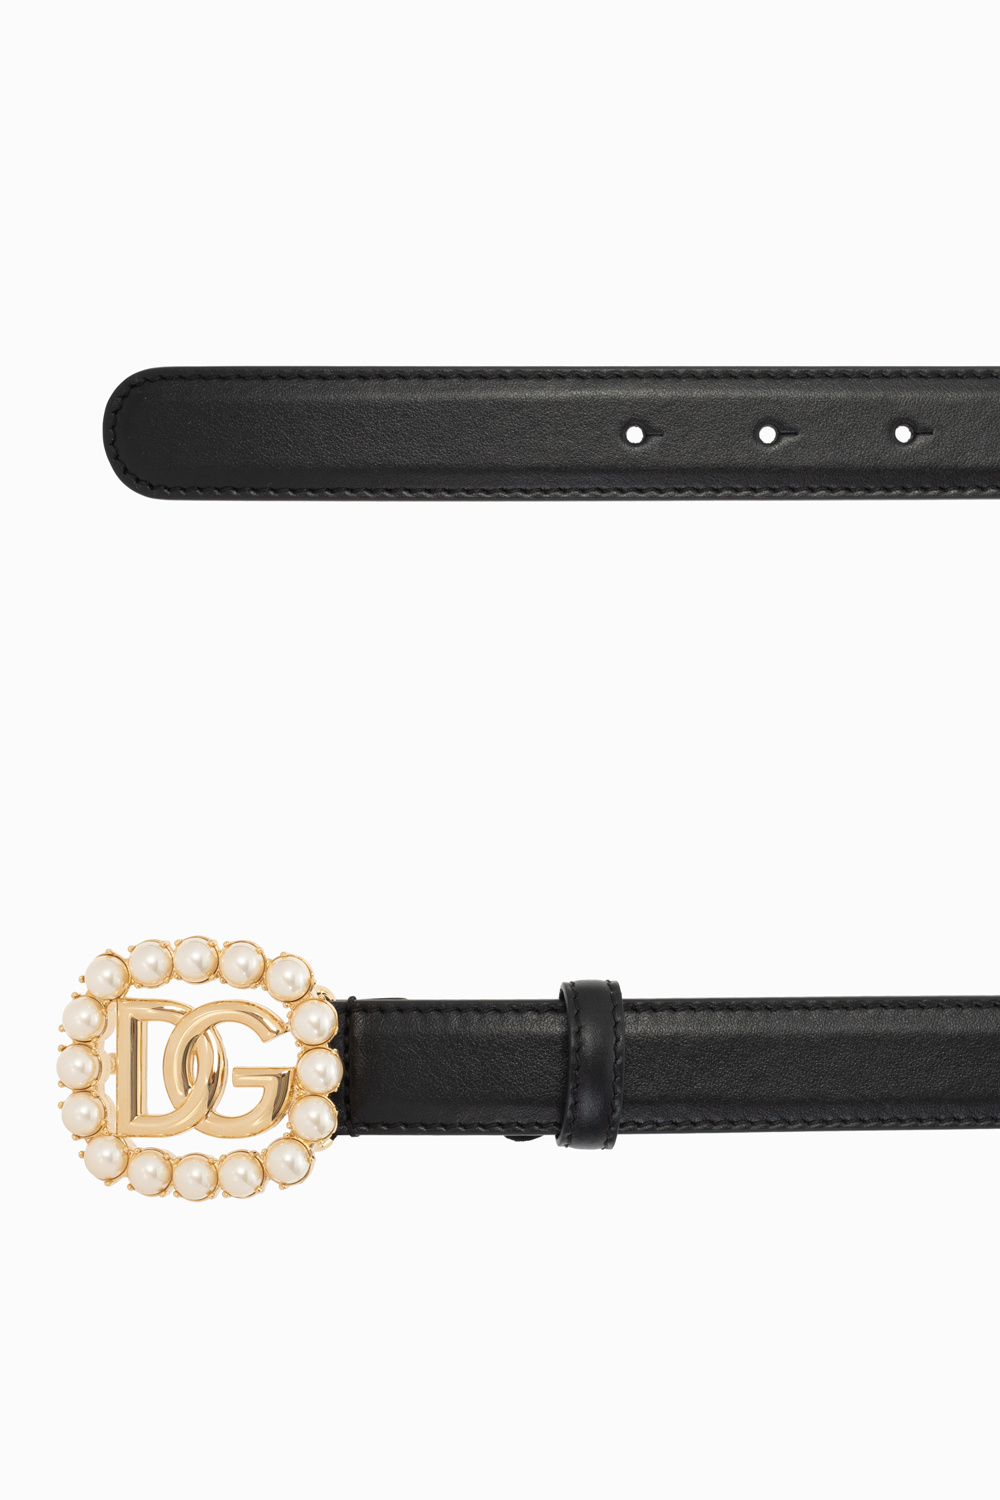 Cinturones dolce ANIMAL & Gabbana Belt with logo